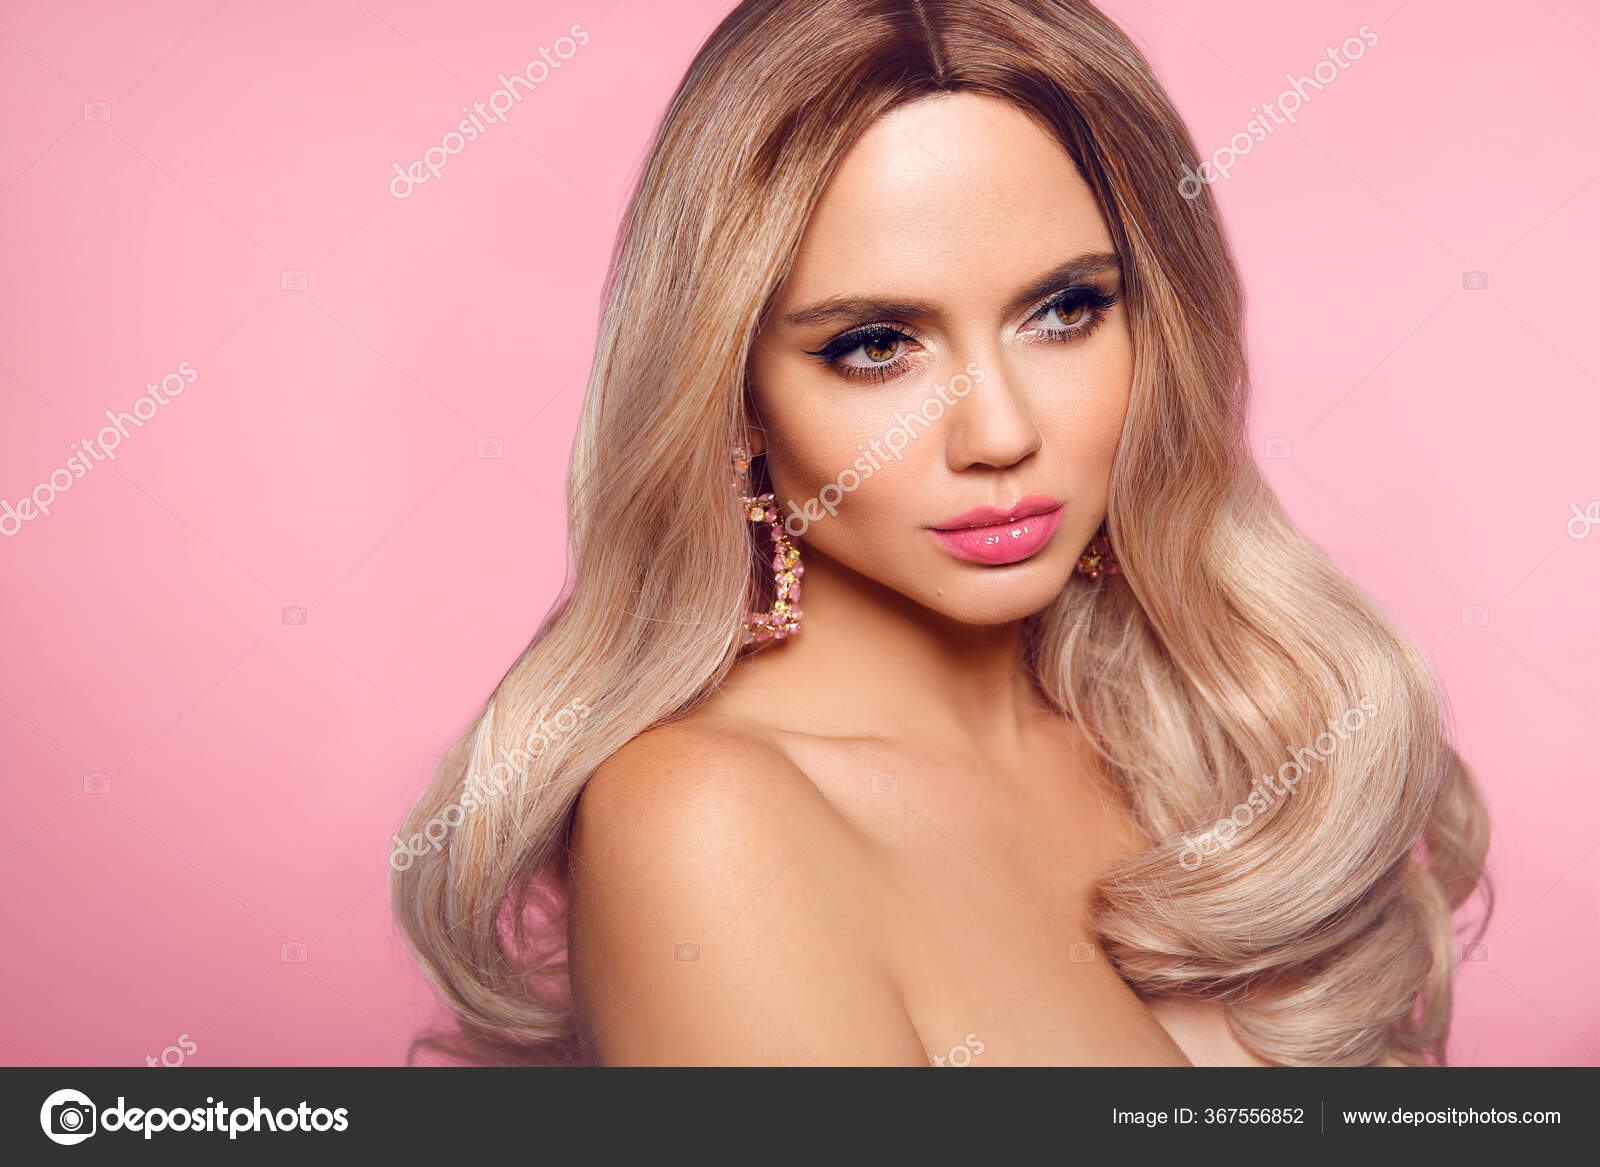 Stylish Pink Wavy Girl Hair